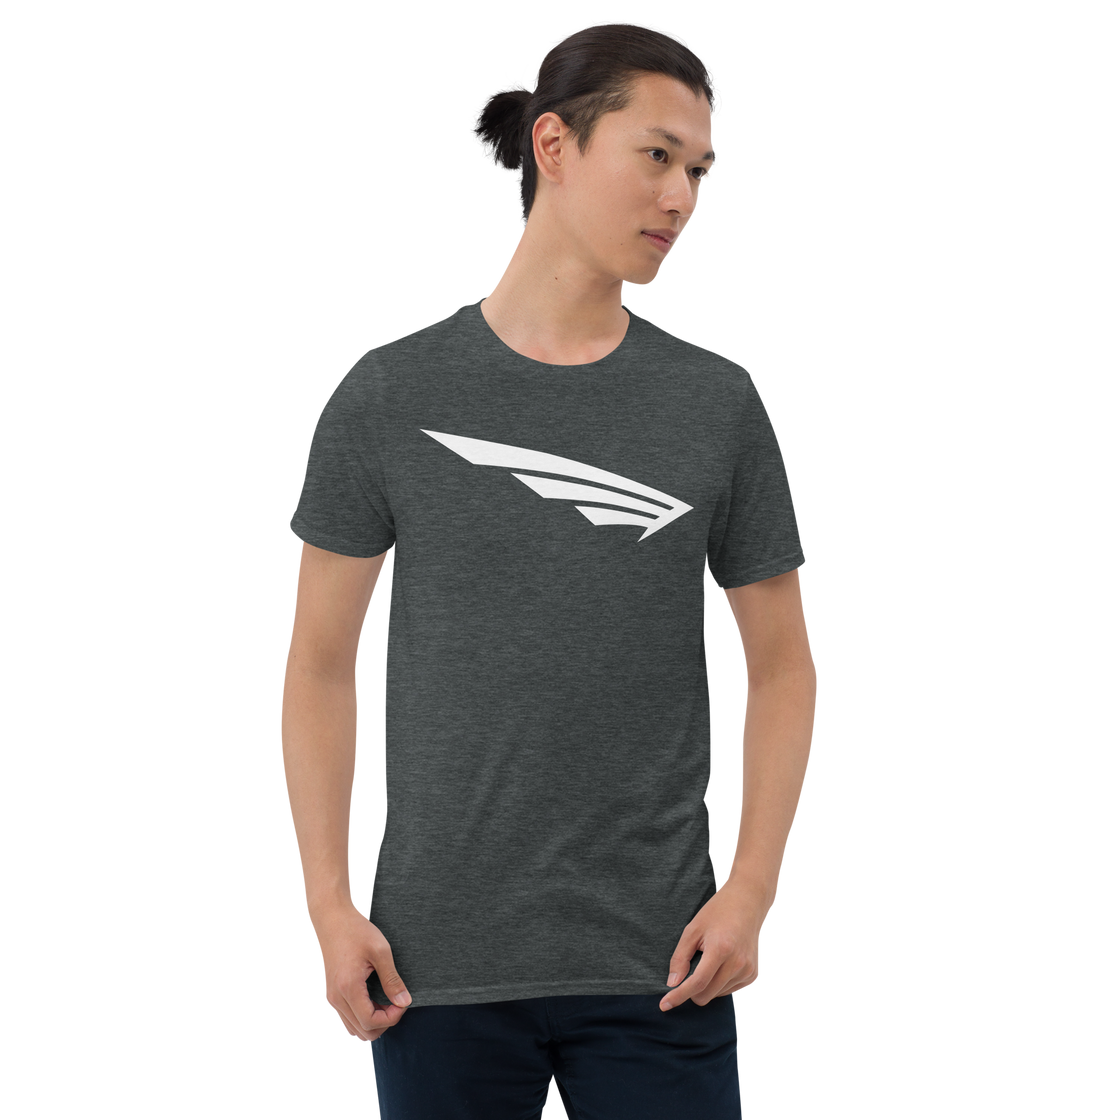 FLY³ T-Shirt | Flycube